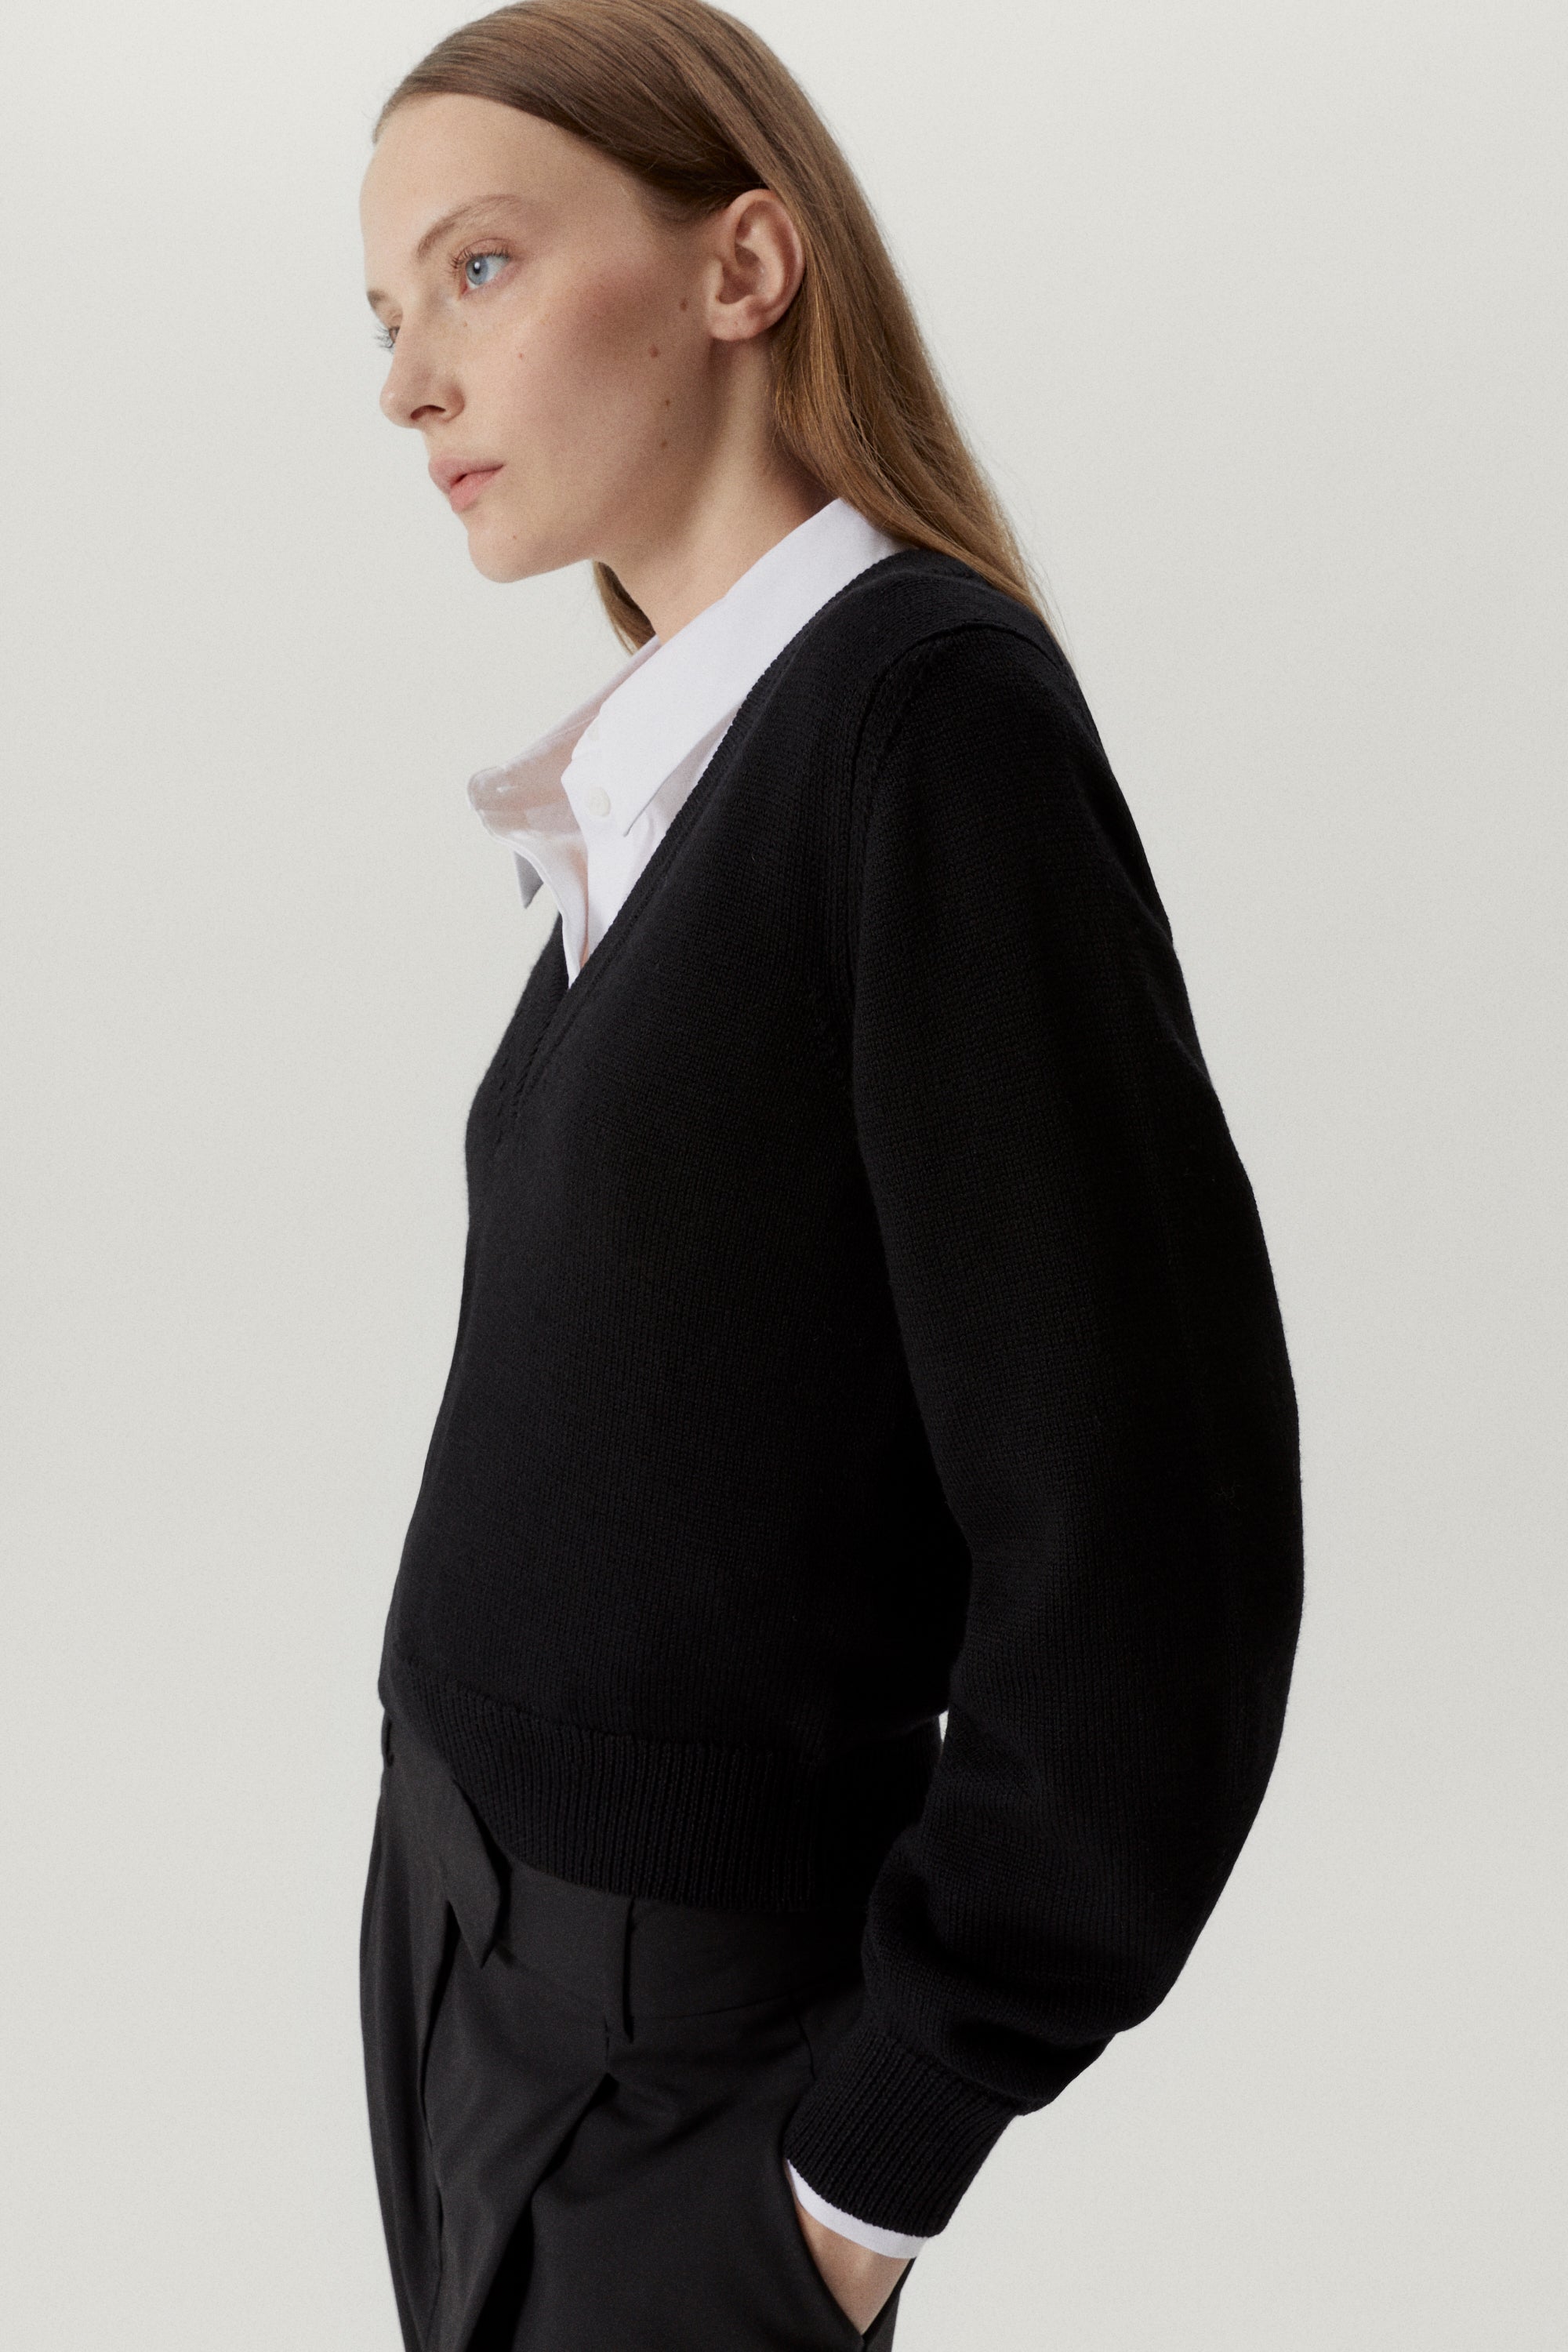 the merino wool cropped v neck black